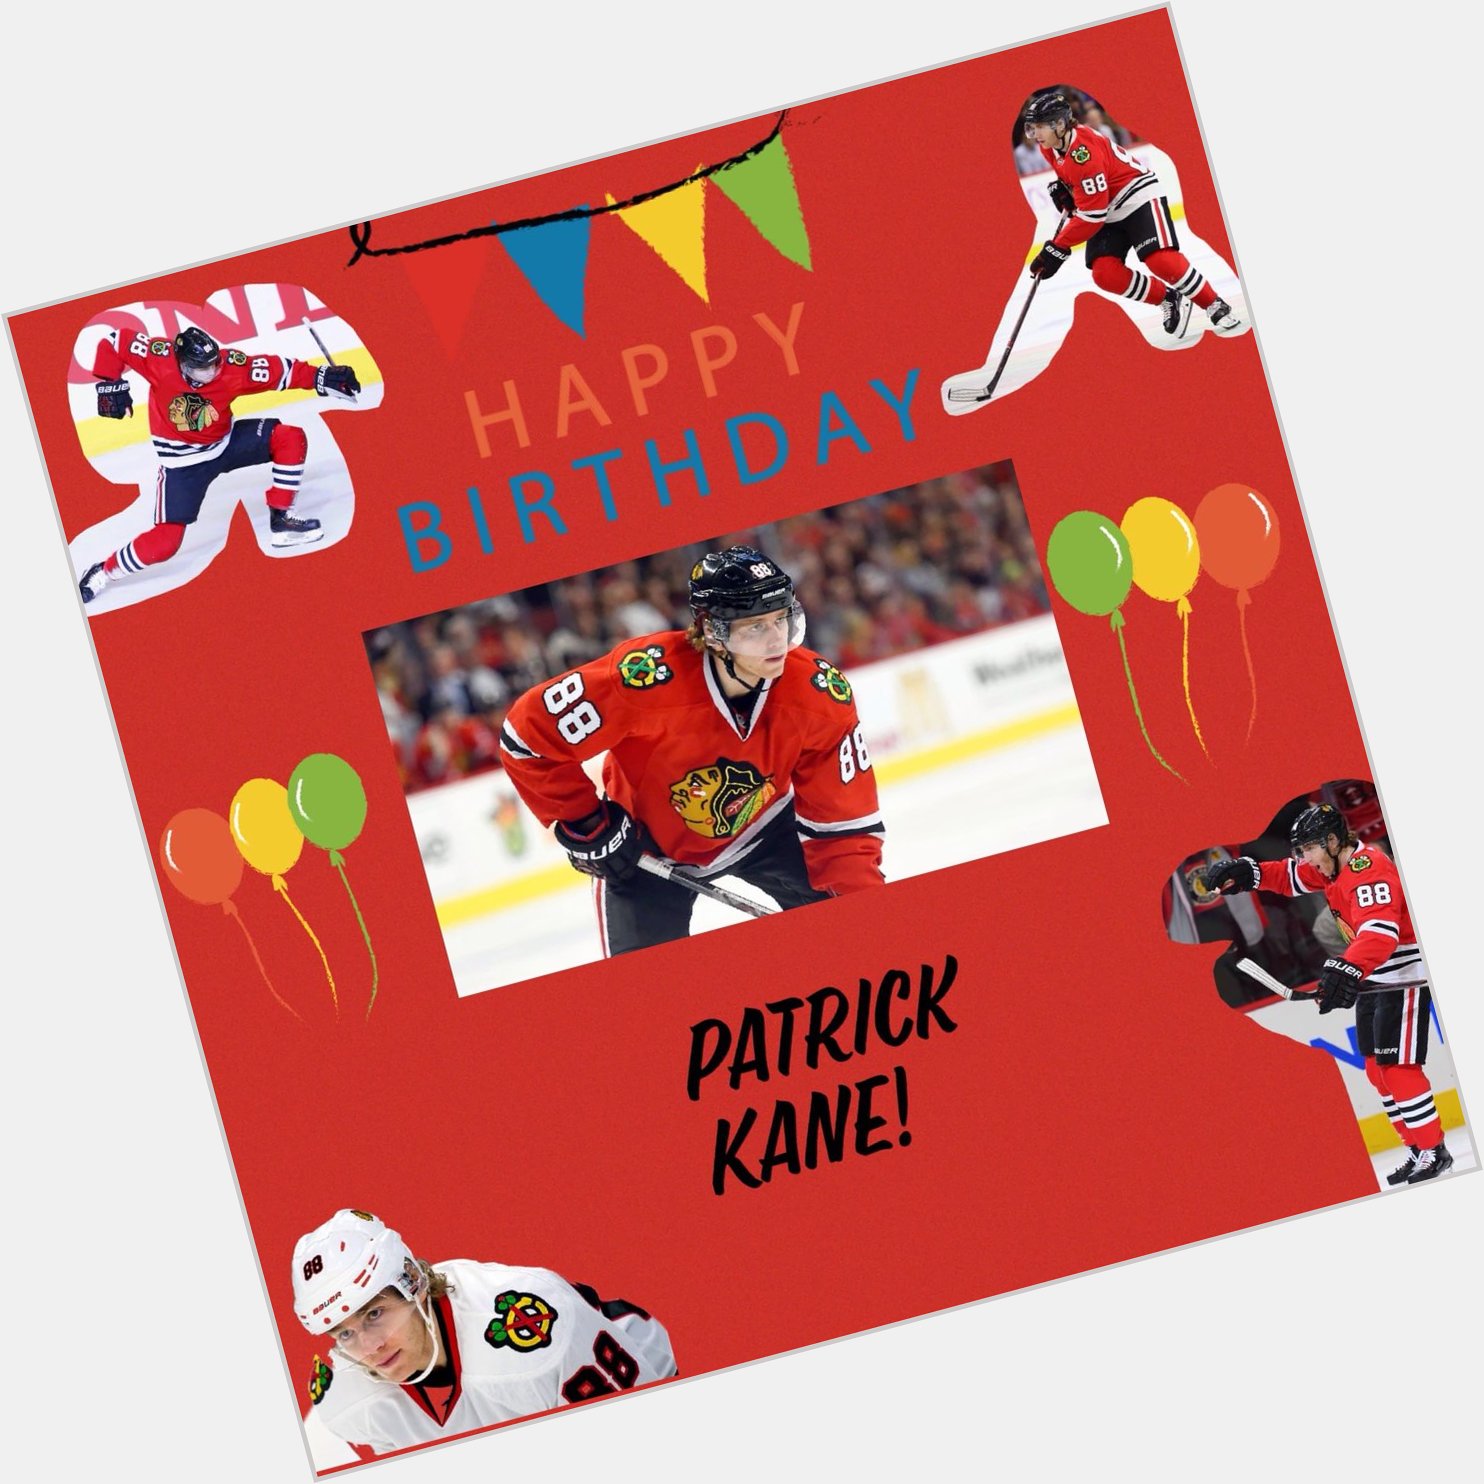 Wishing a happy birthday to Patrick Kane!  